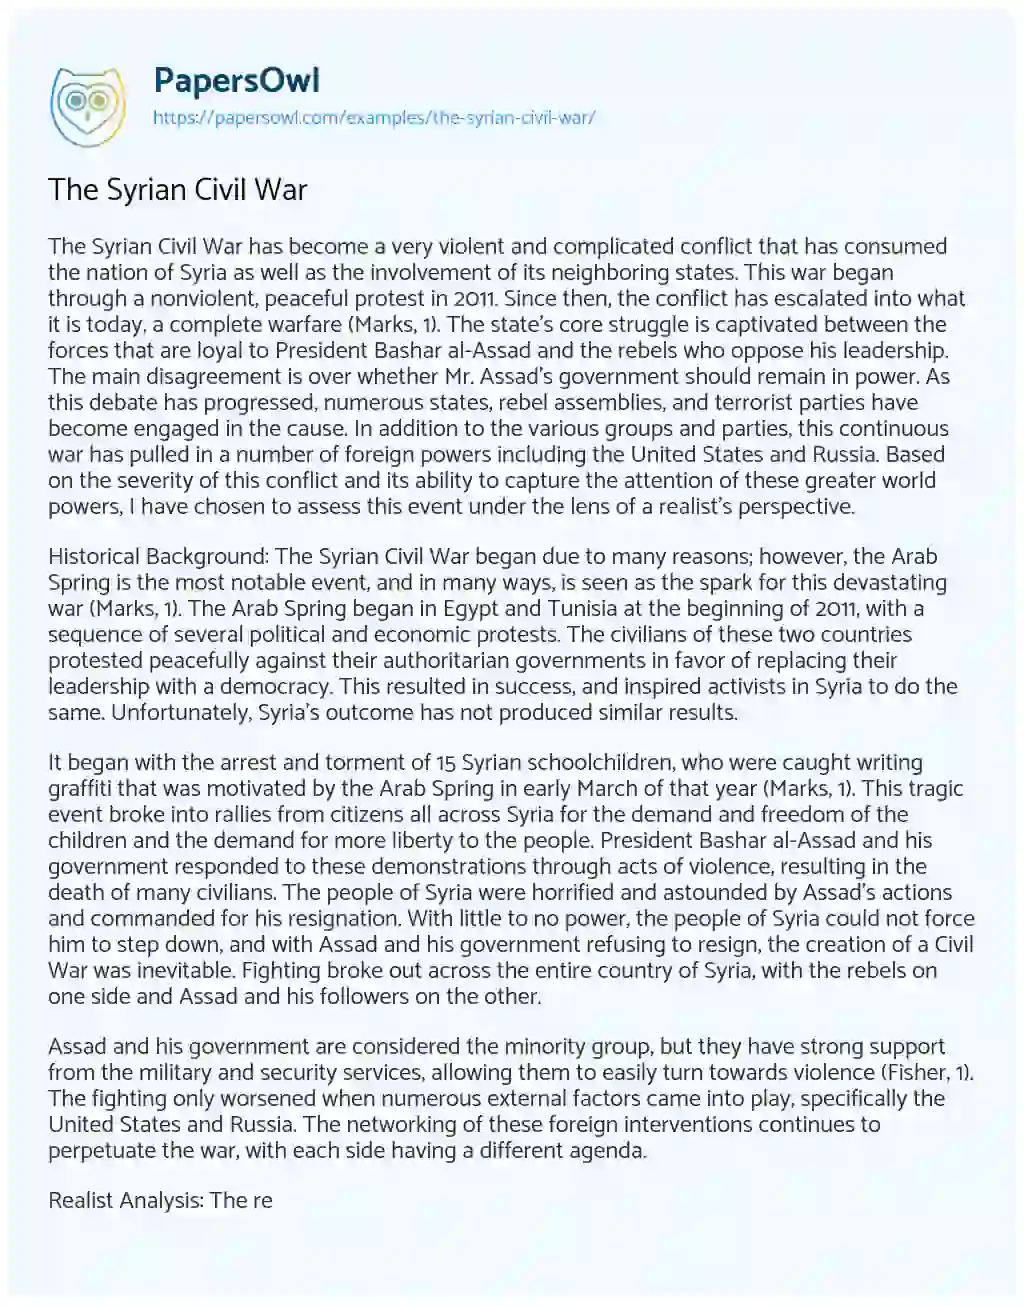 The Syrian Civil War essay